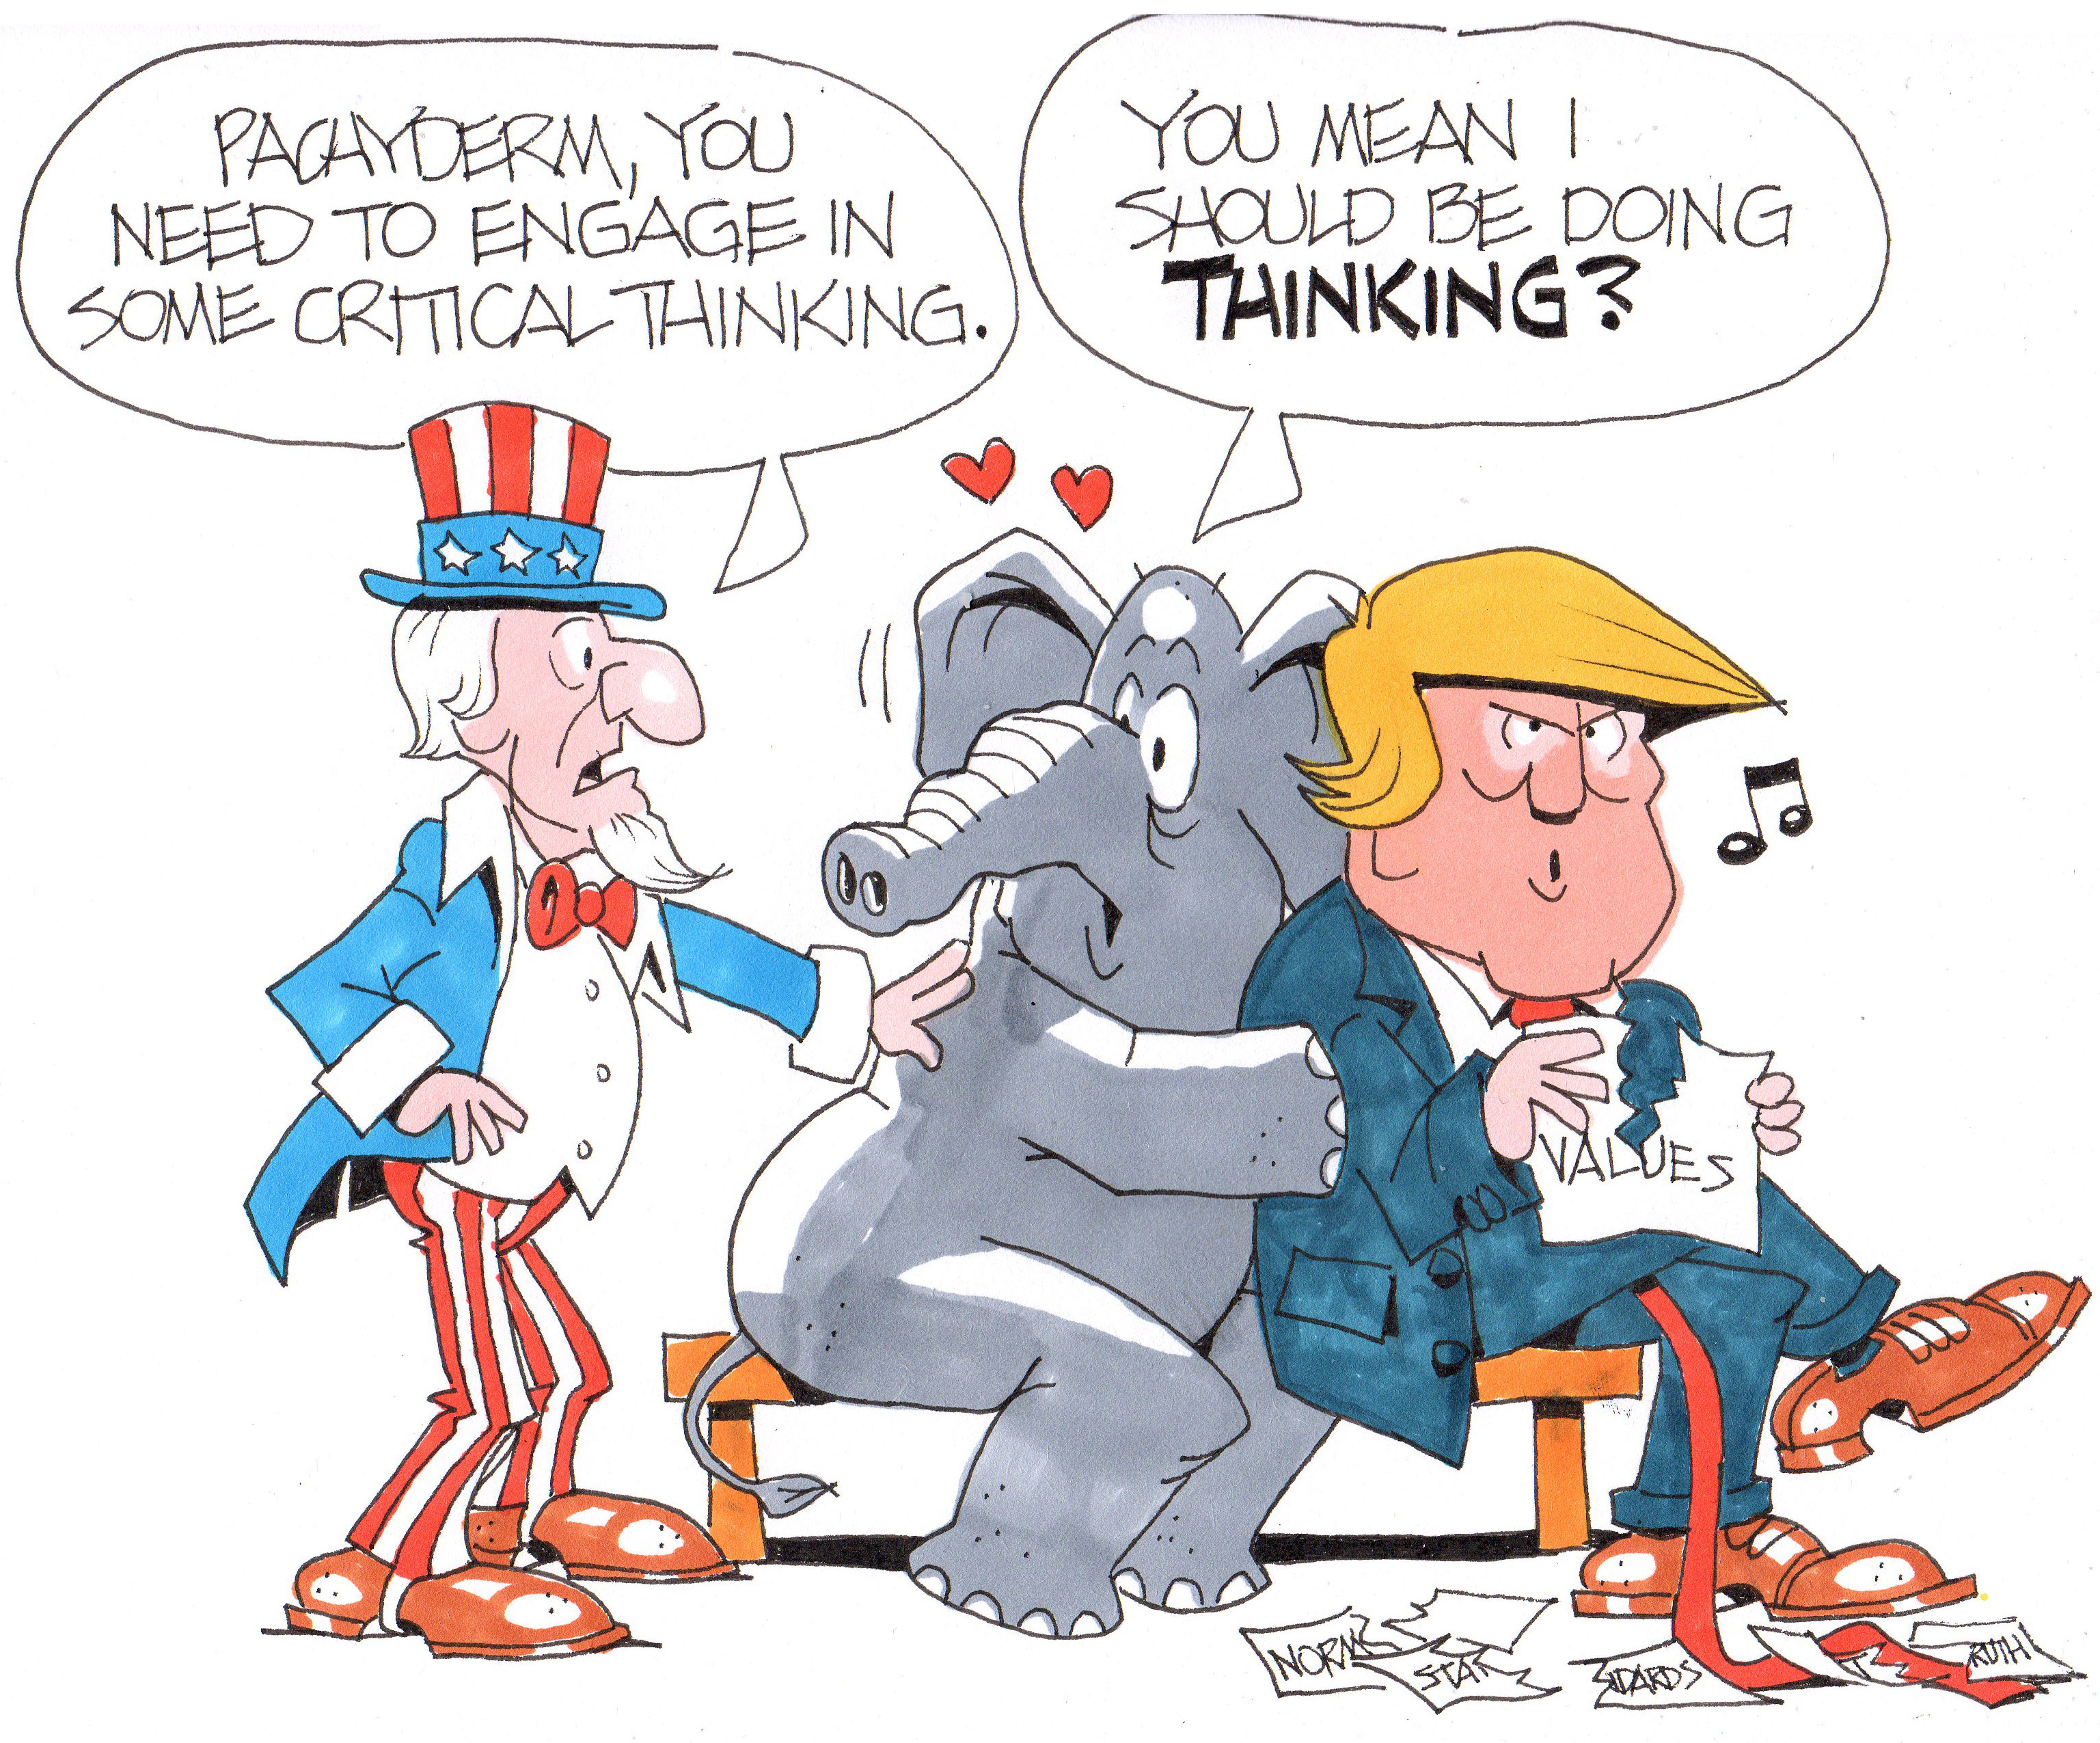 critical thinking comic